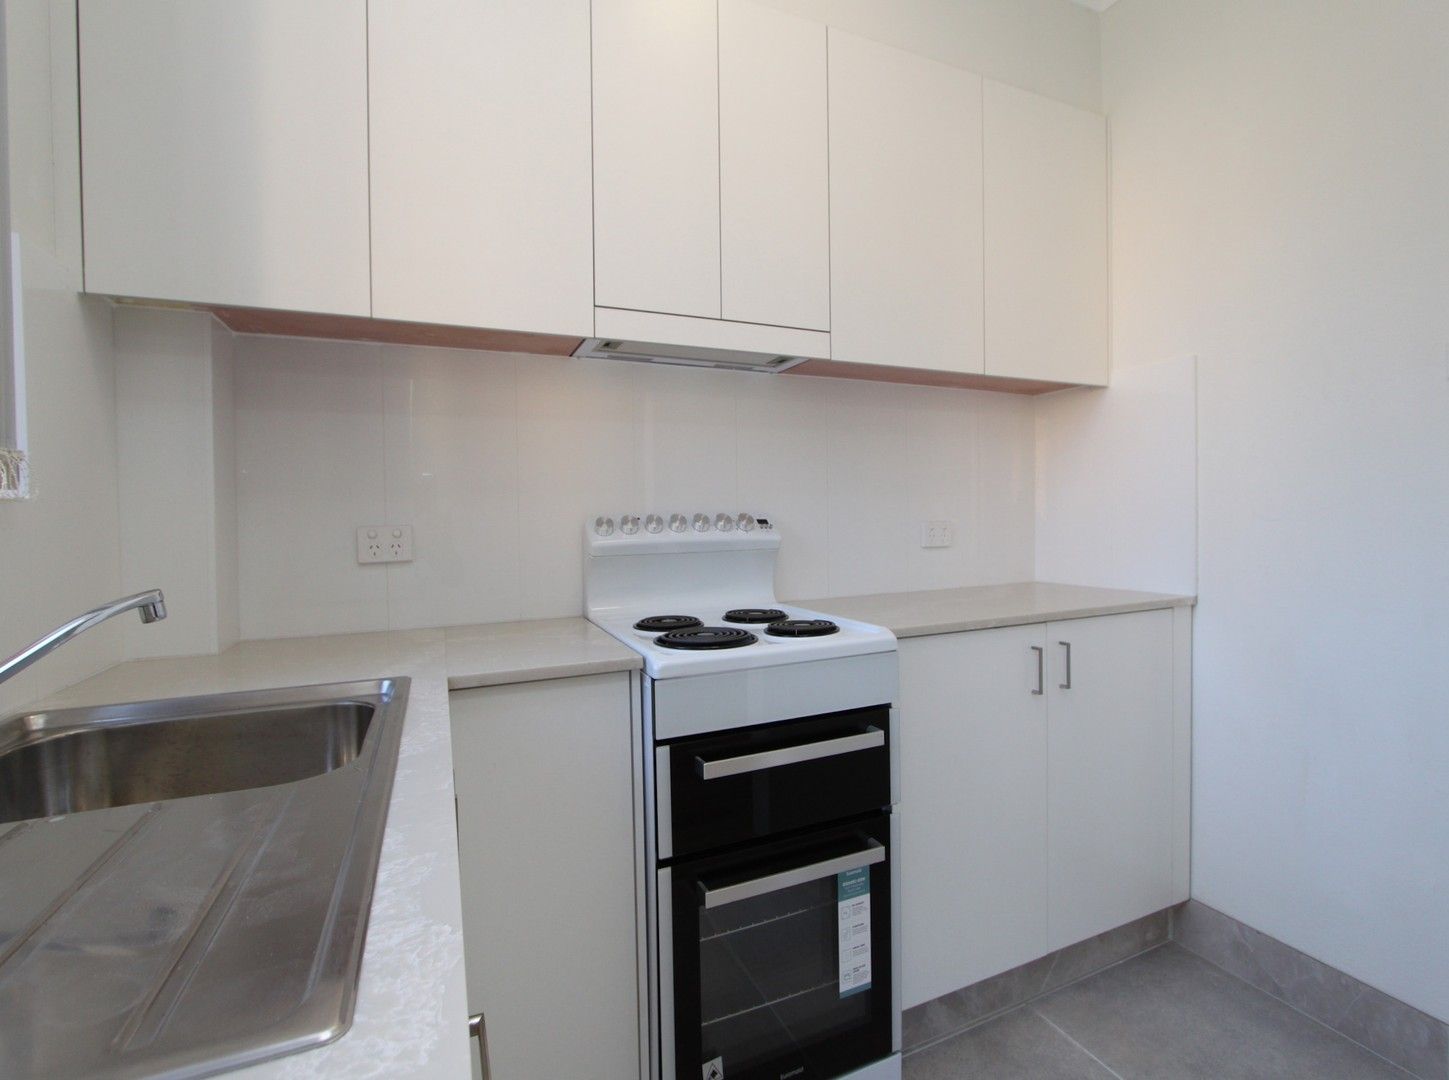 1 bedrooms Apartment / Unit / Flat in 10/29 Cambridge Street PENSHURST NSW, 2222